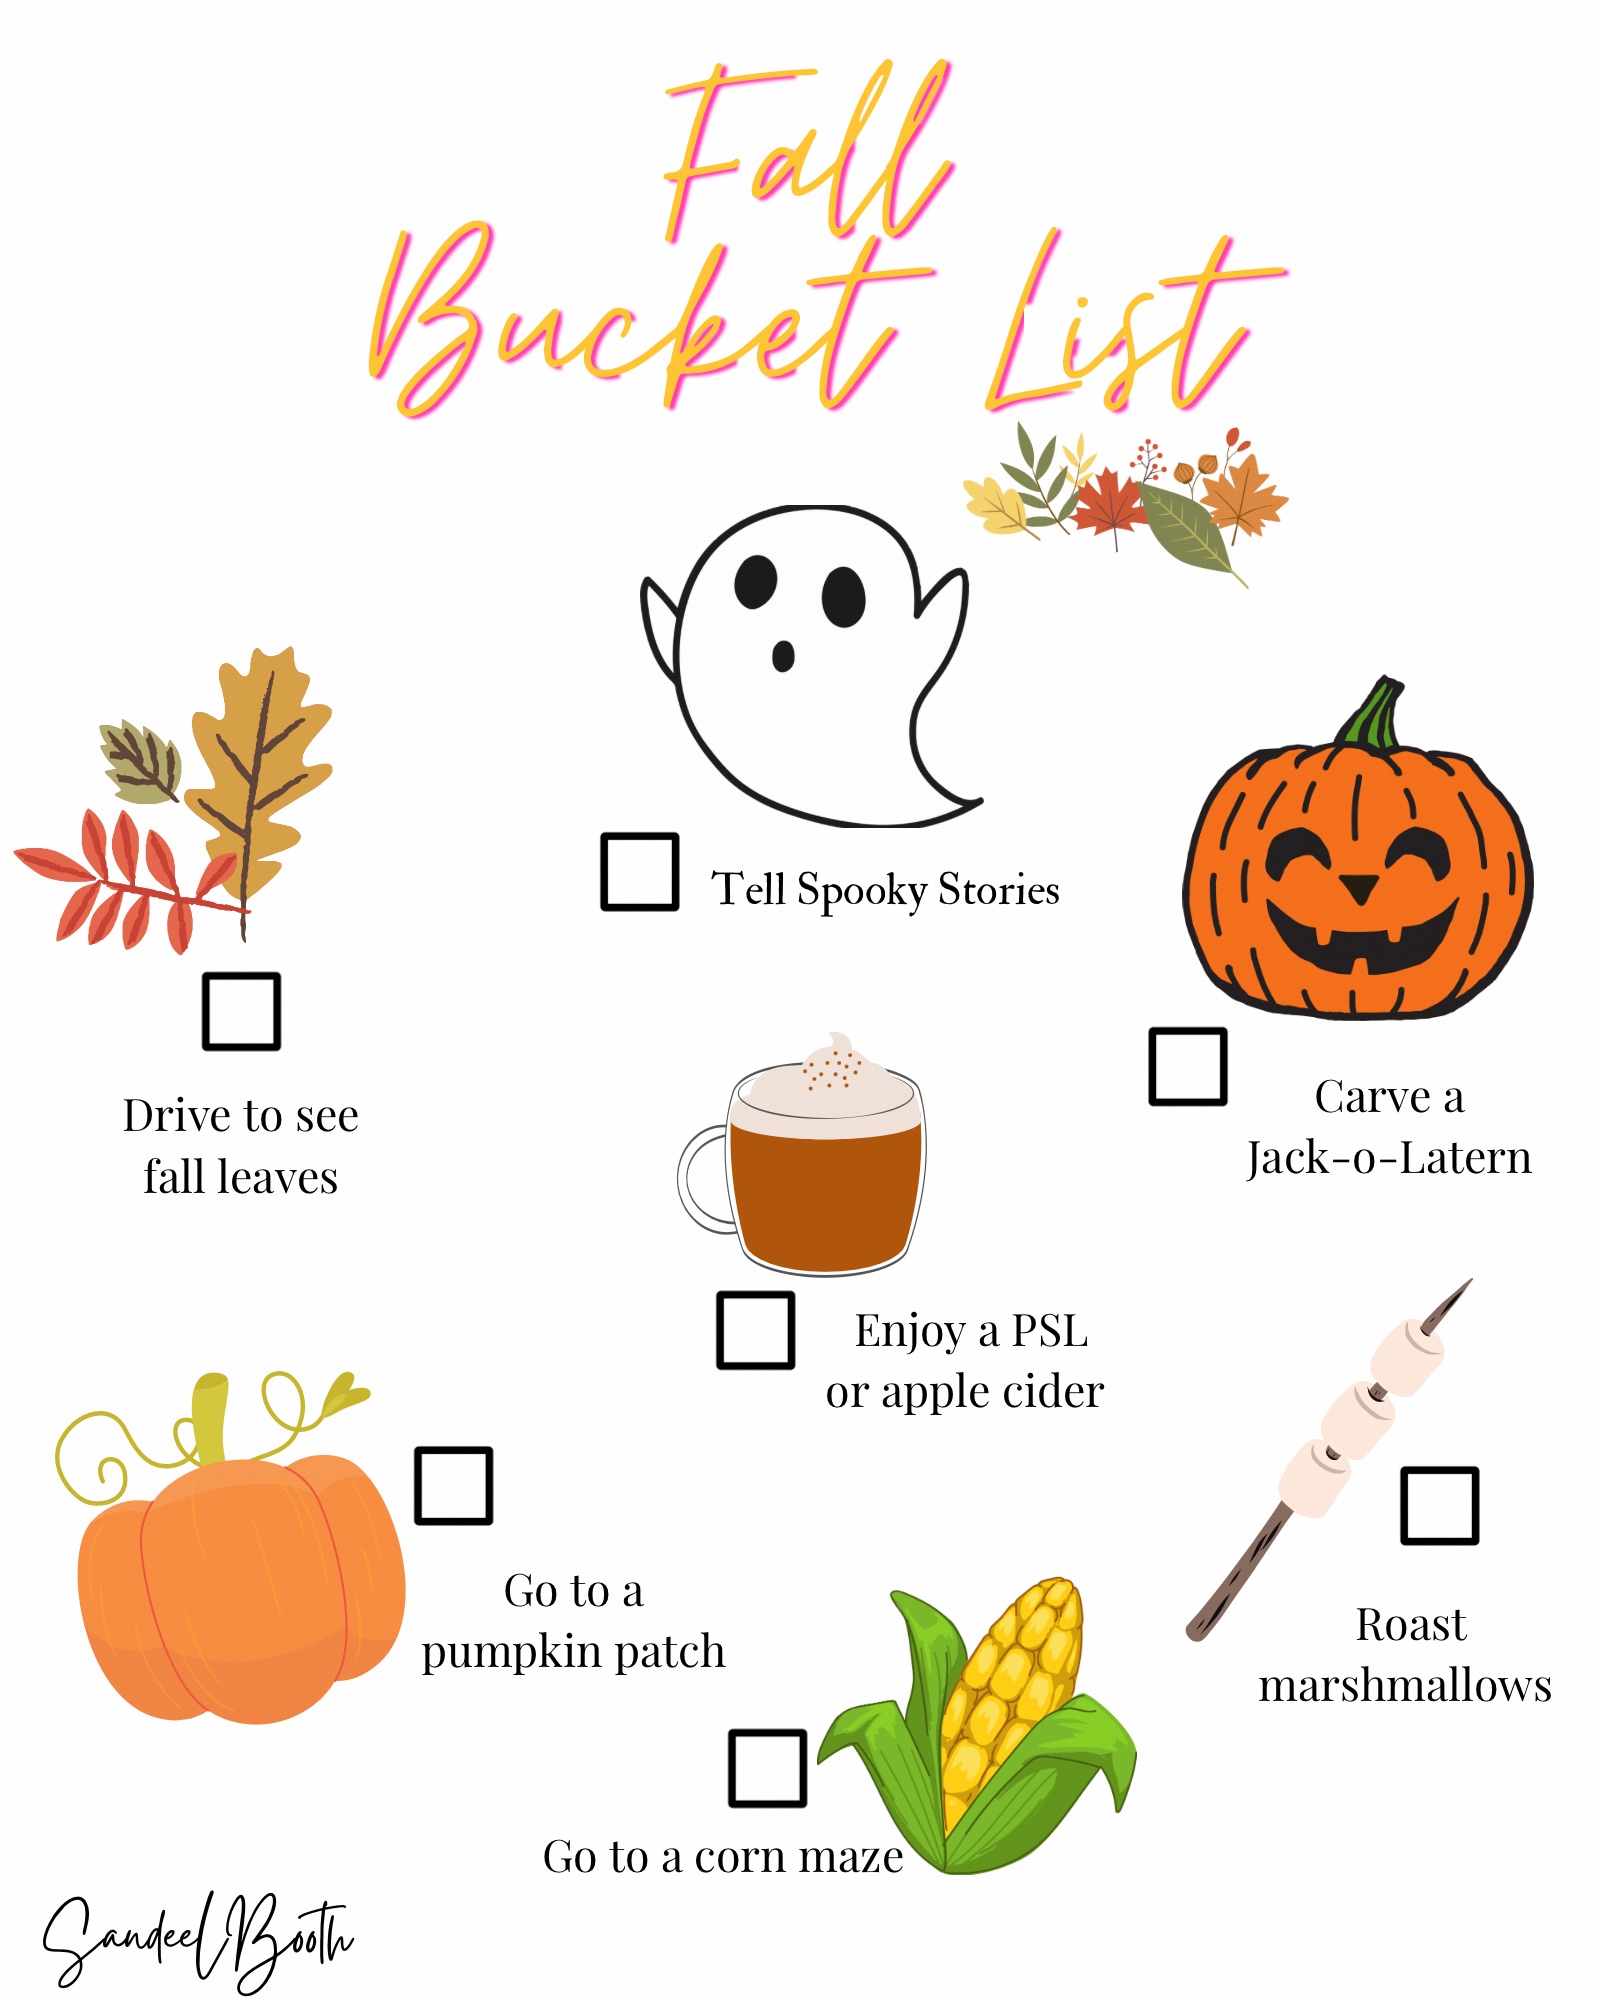 Pumpkin patch - fall bucket list printable - sandee booth